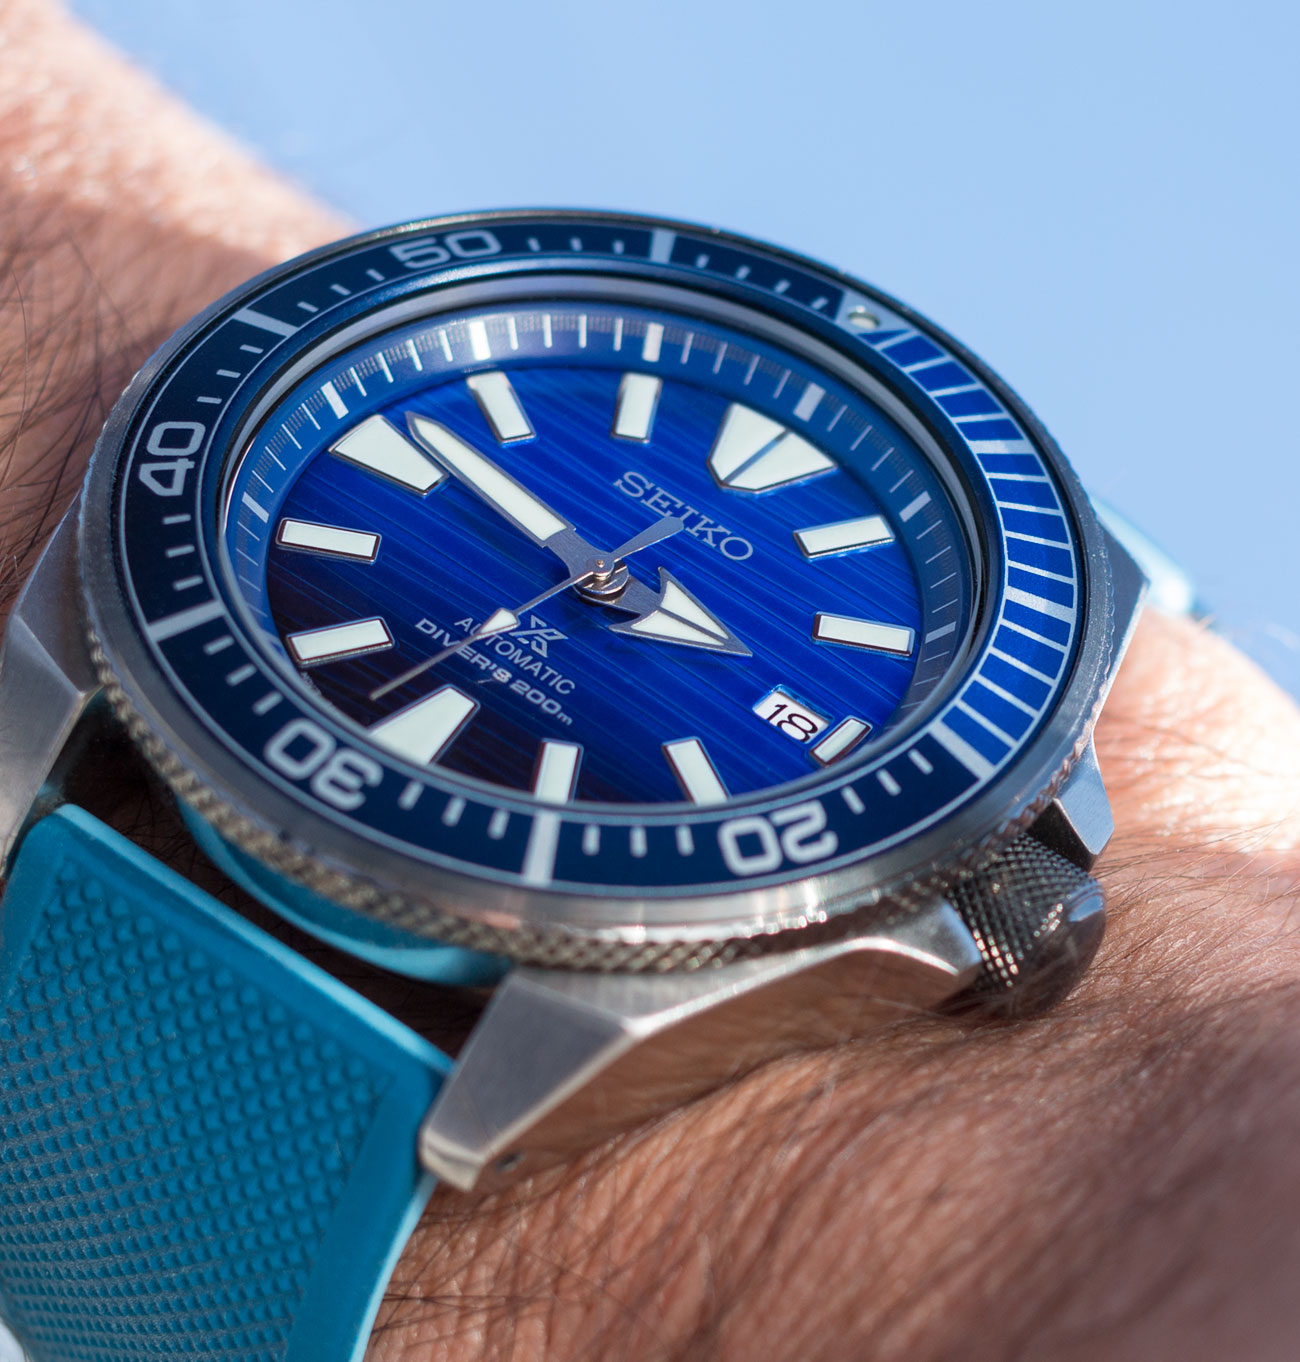 Seiko Prospex SRPC93 'Save The Ocean' Samurai Dive Watch Review wristshot